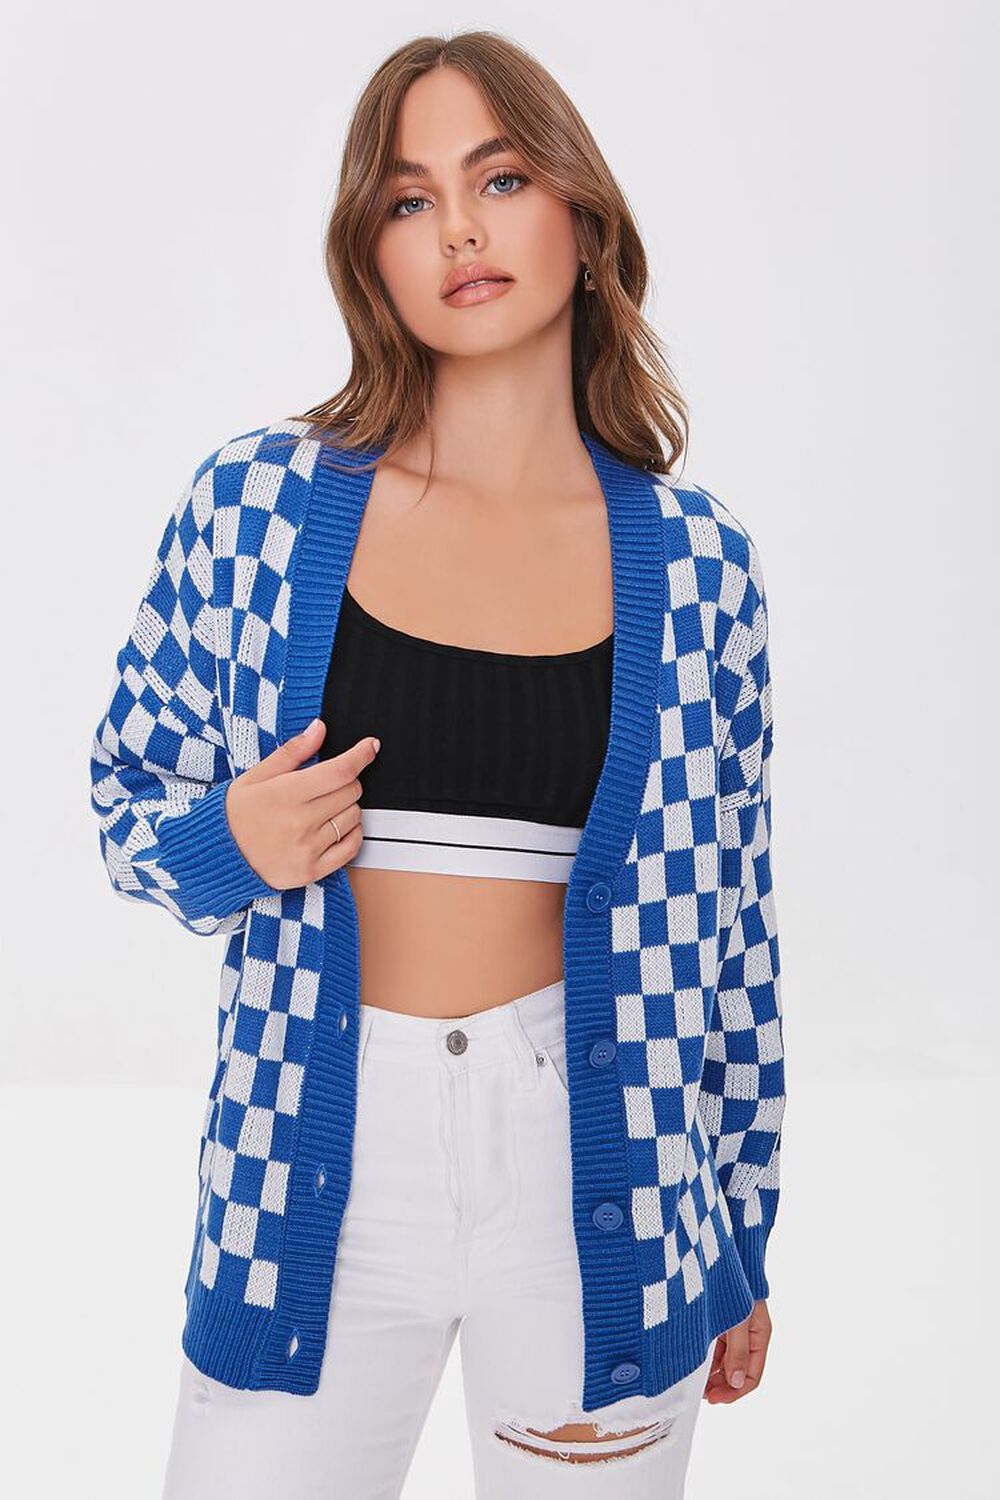 BLUE/CREAM Checkered Cardigan Sweater, image 1